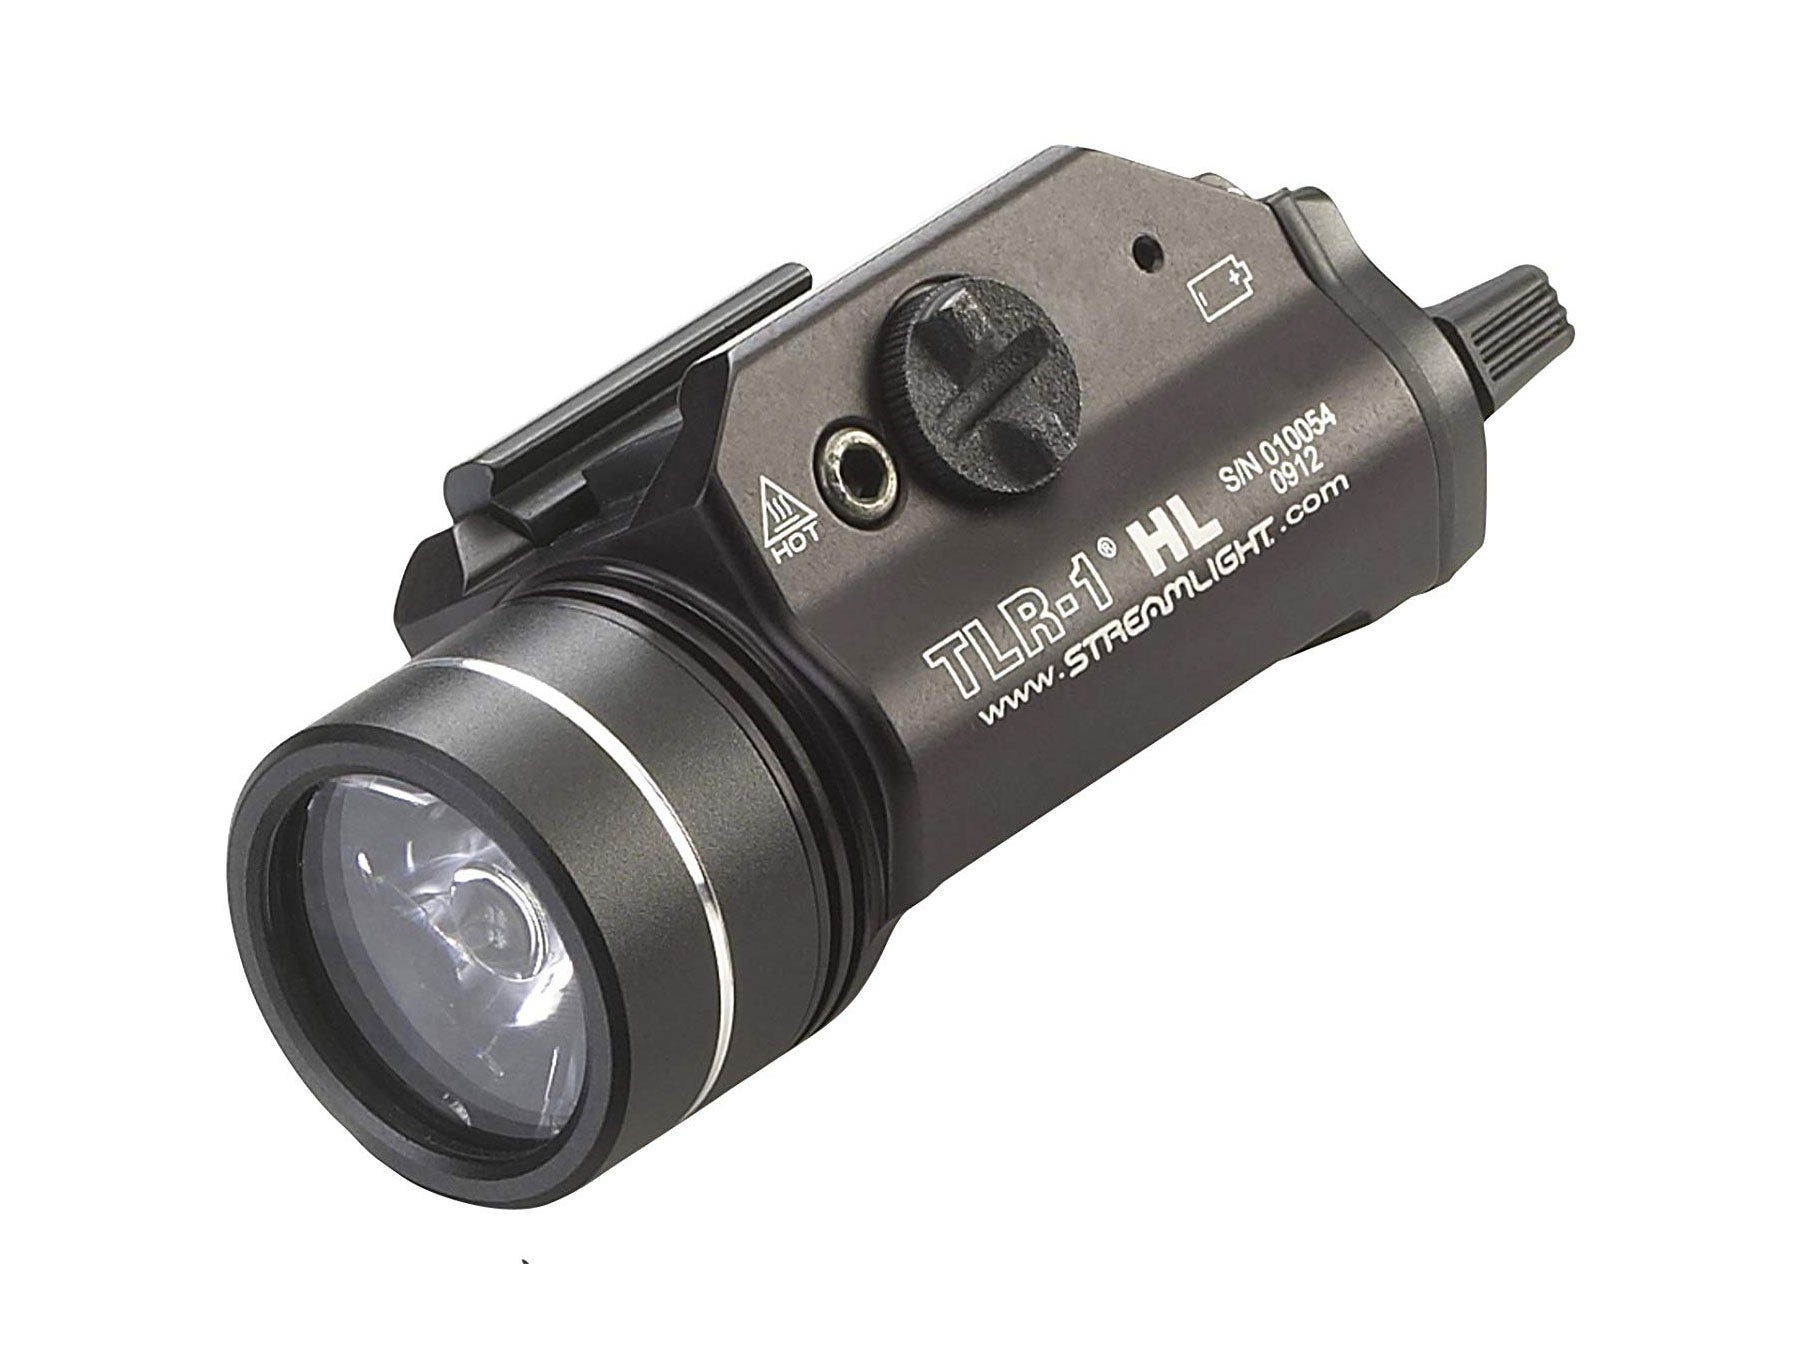 Streamlight tactical flashlight